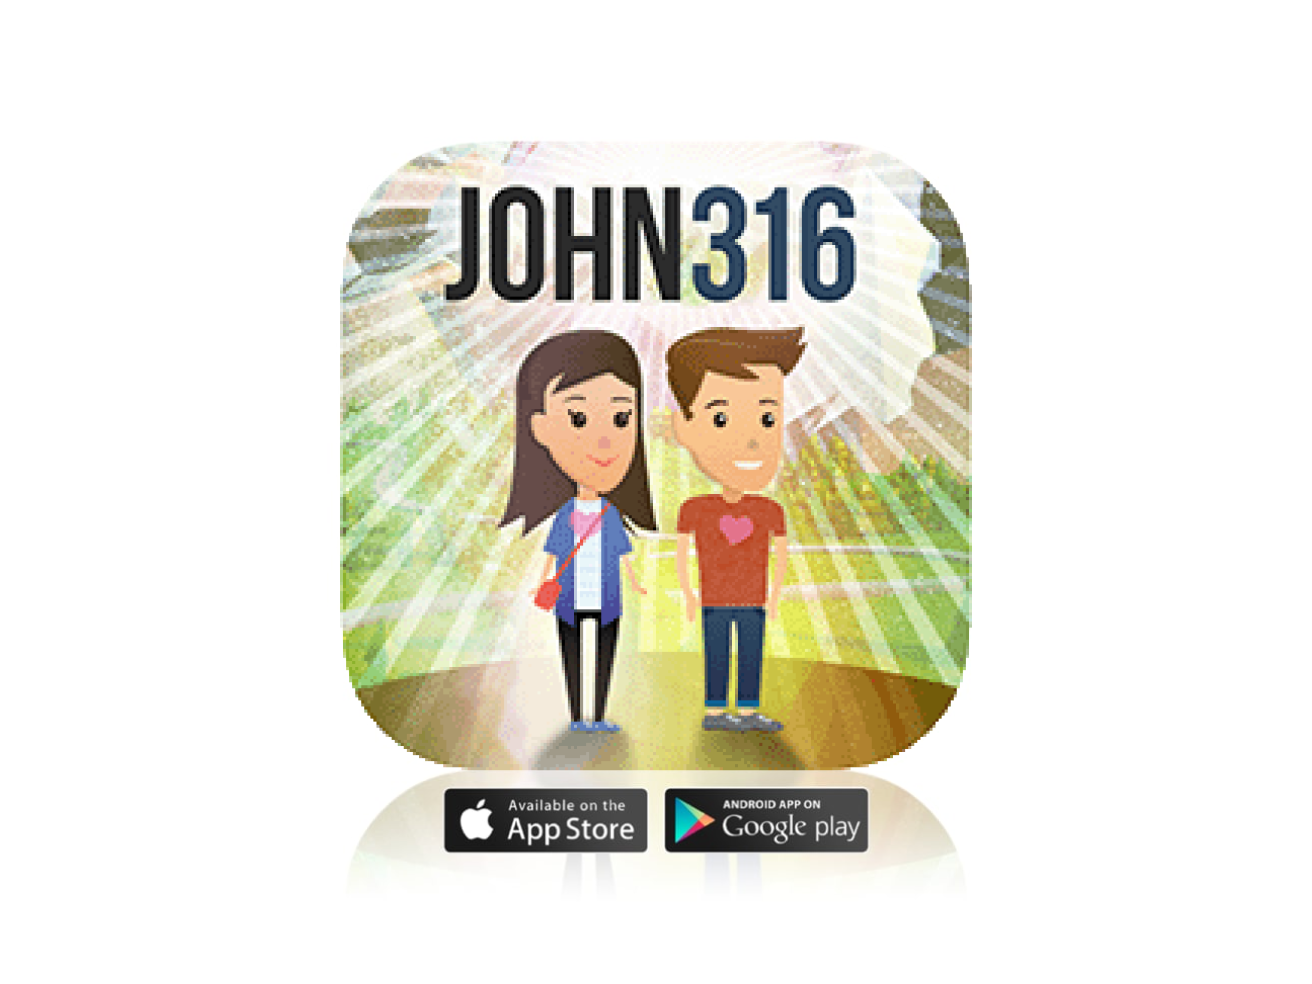 Heart of God Church John 316 App